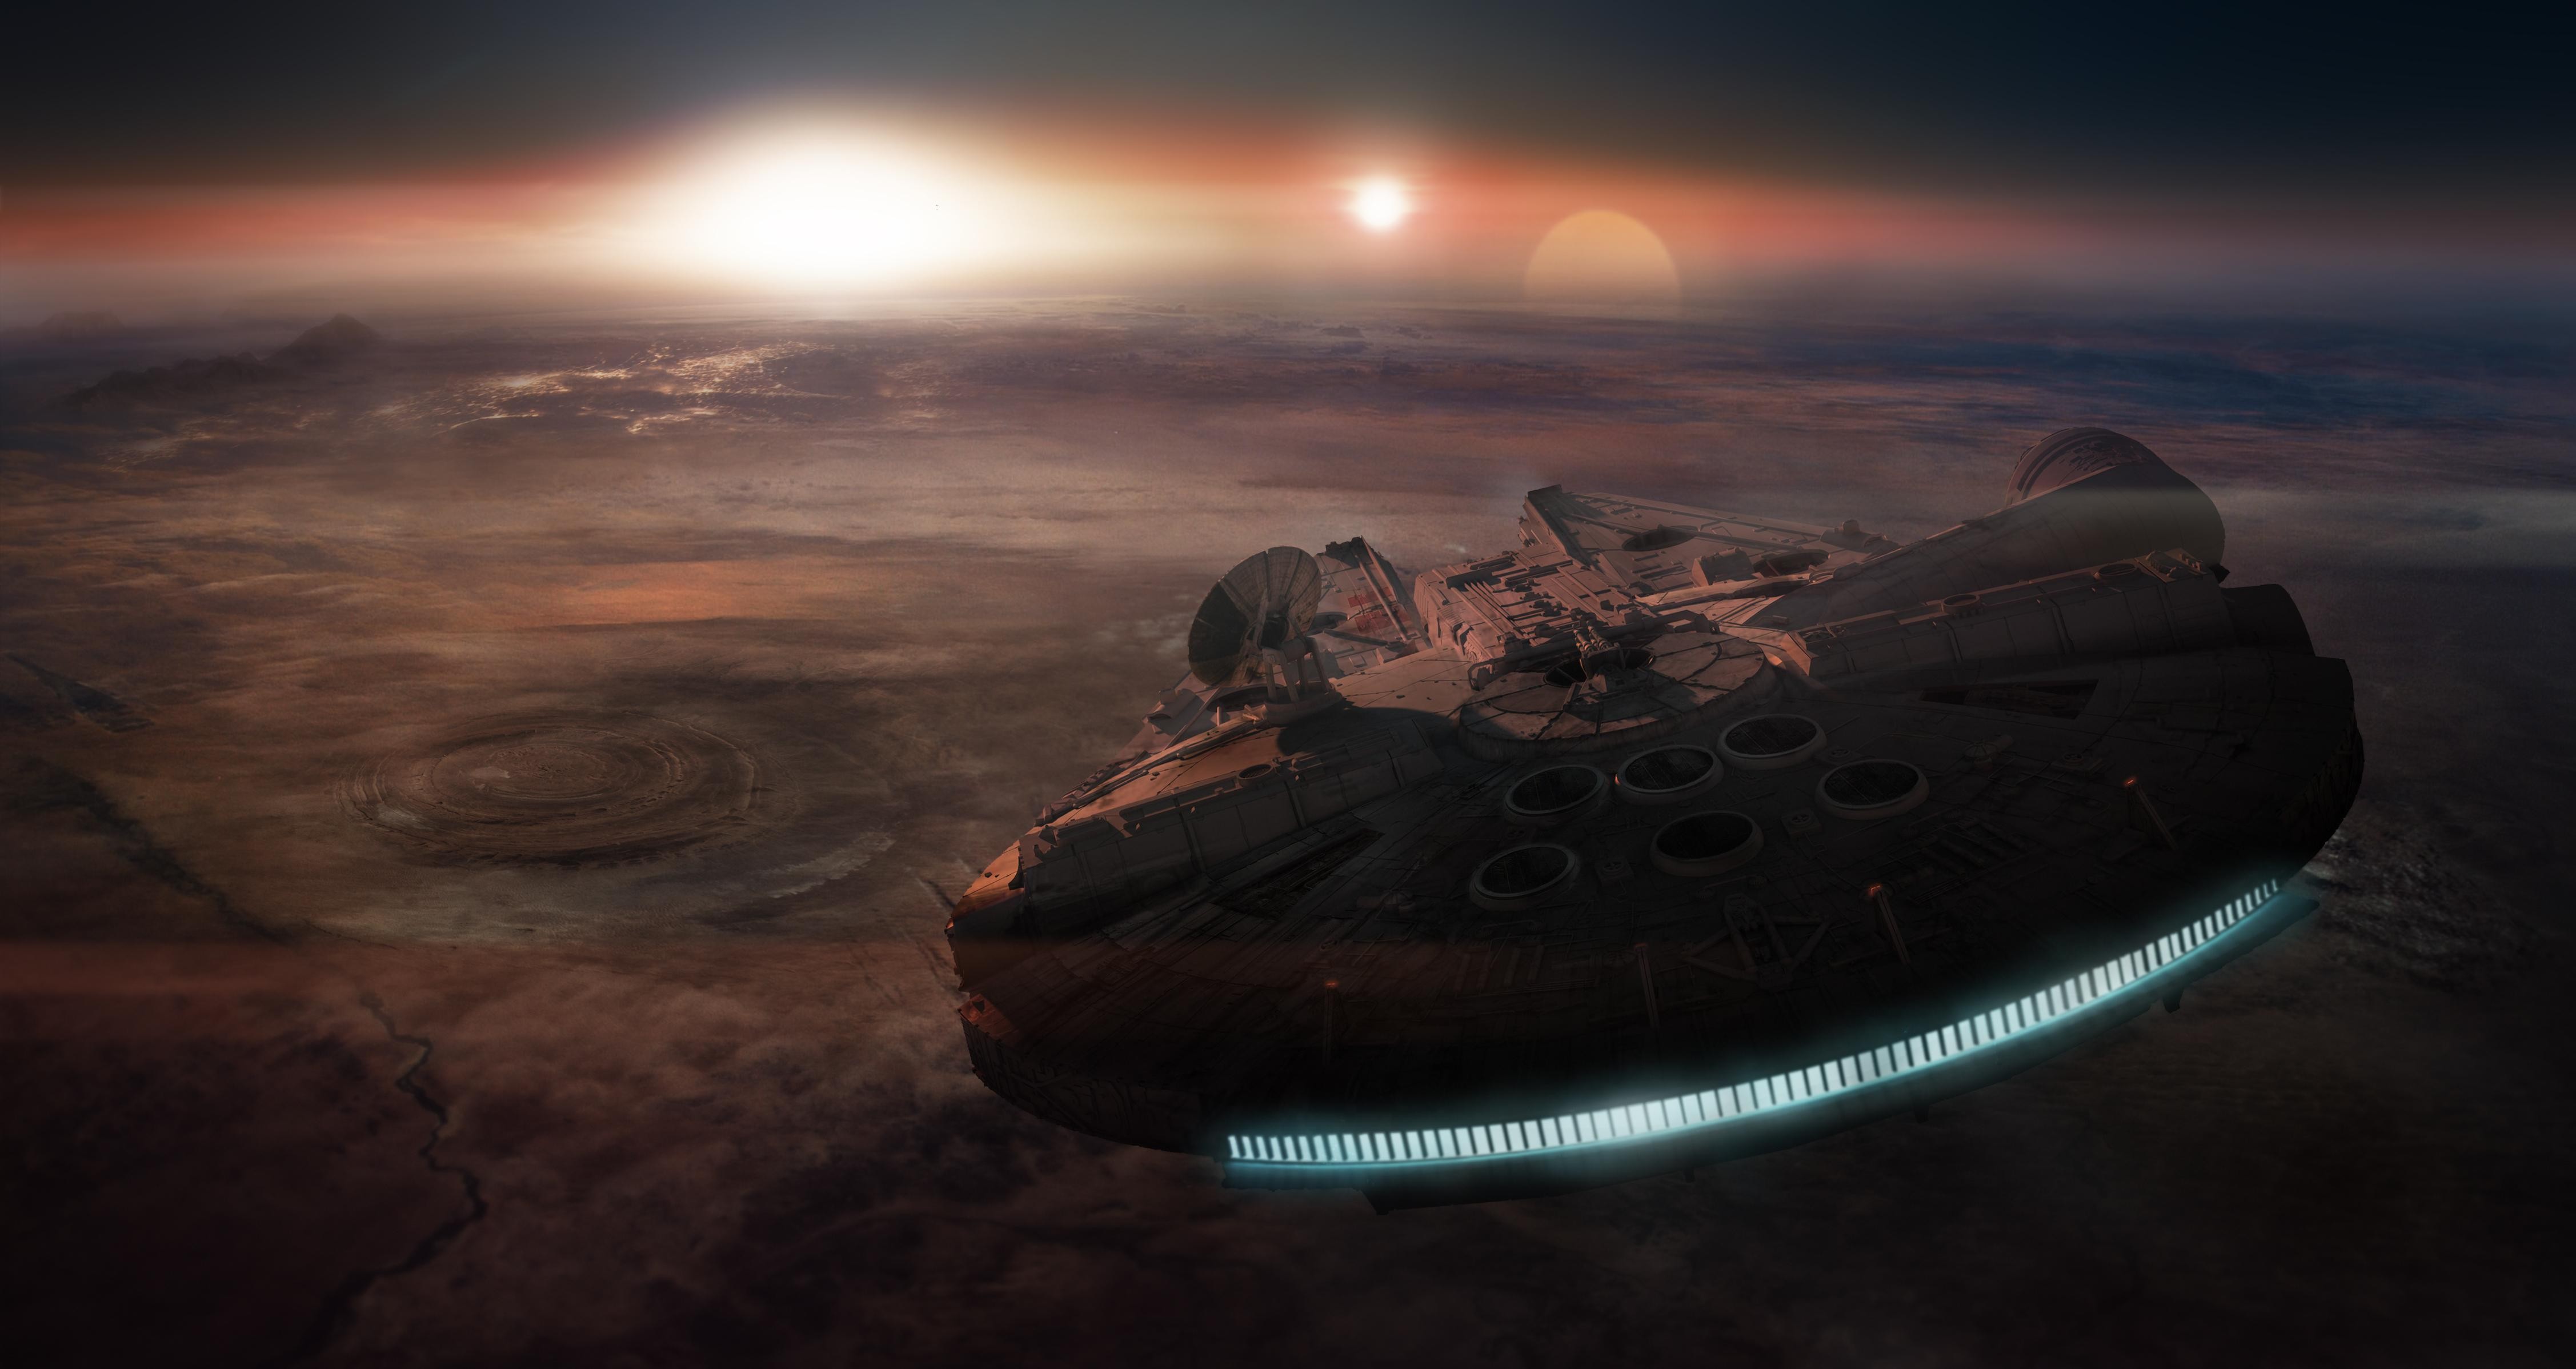 General 4509x2396 Star Wars Millennium Falcon desert sunset Star Wars Ships CGI digital art vehicle spaceship sky sunlight planet science fiction artwork